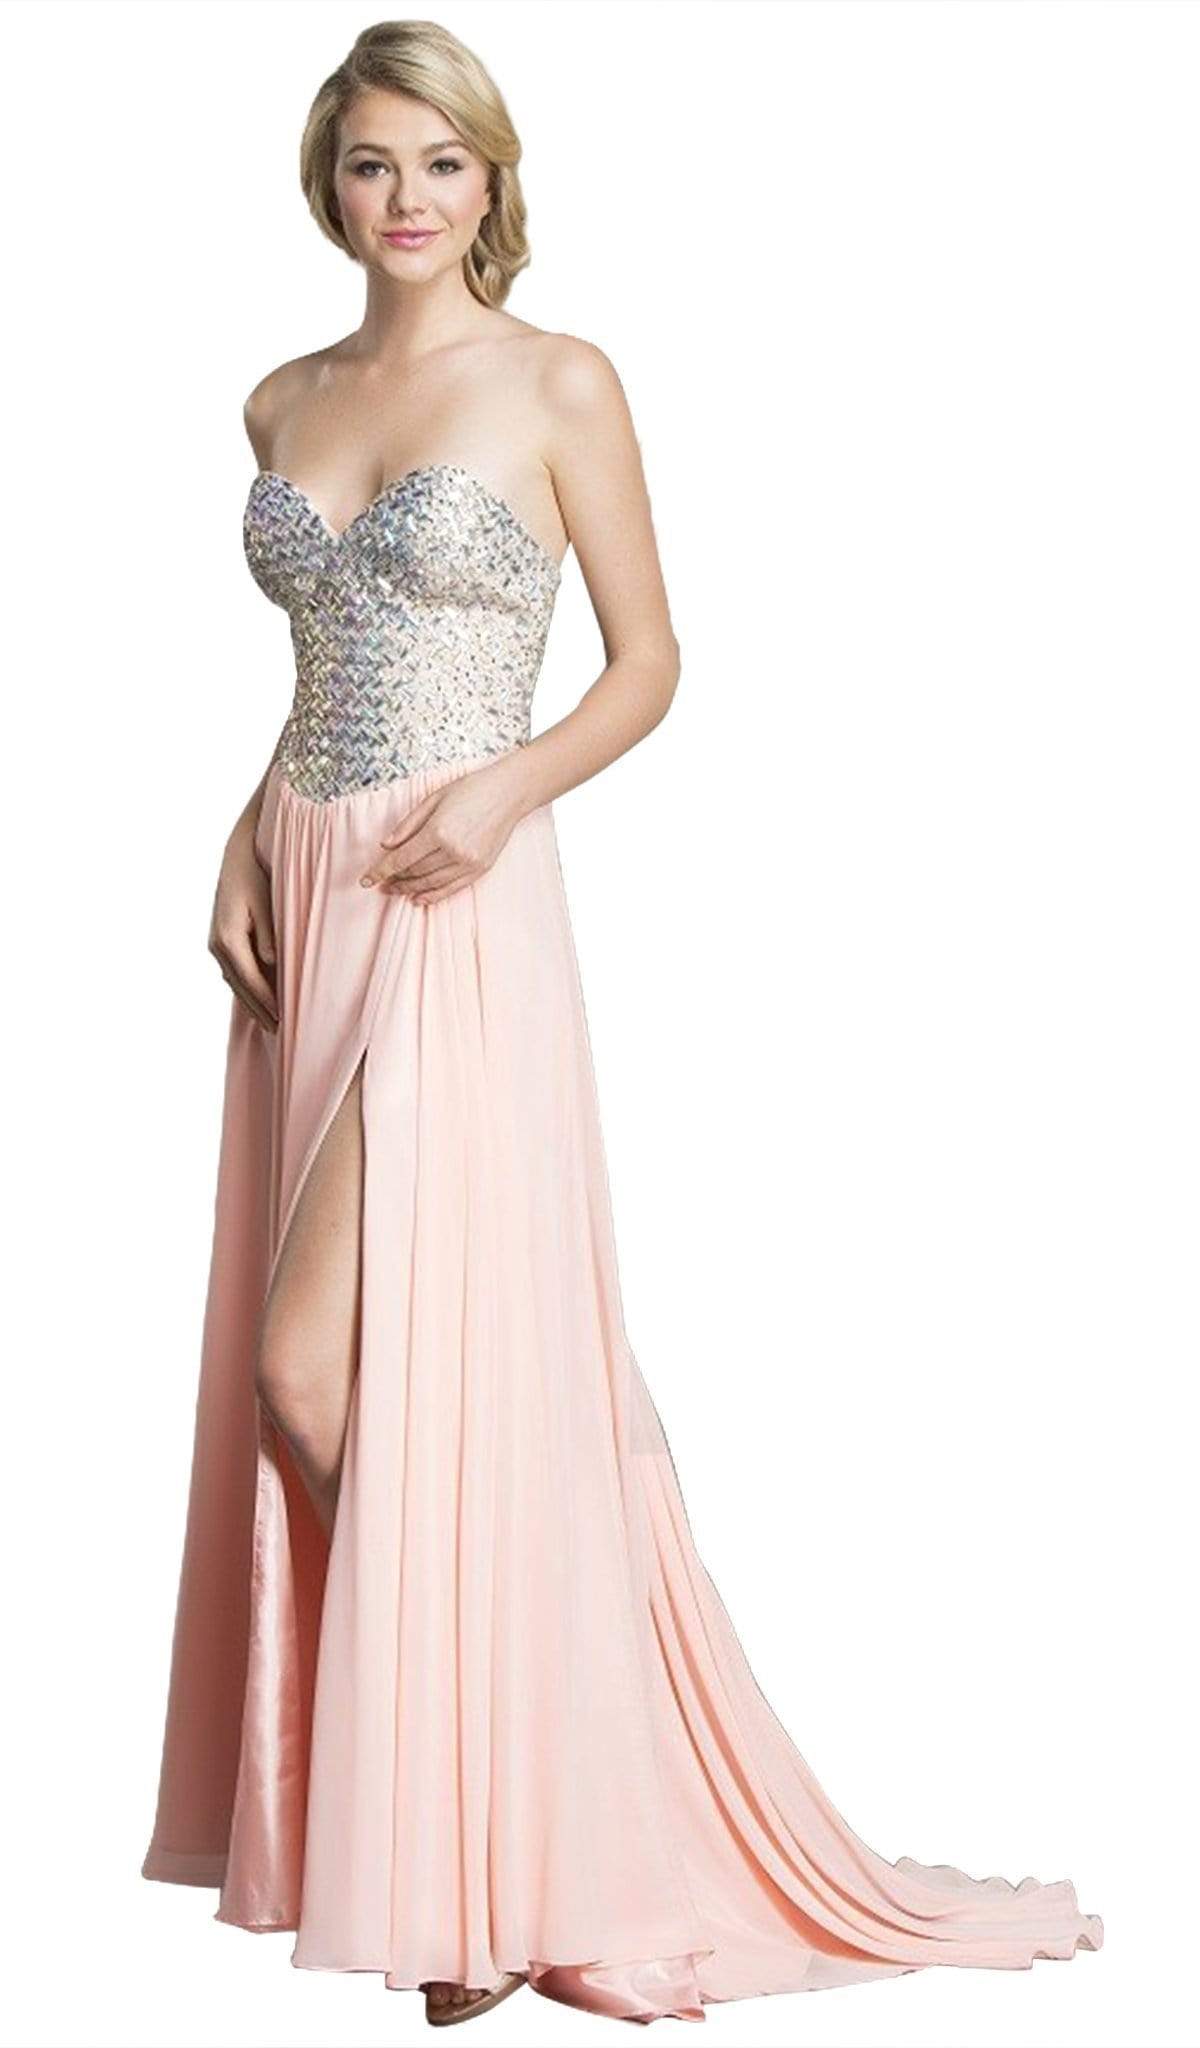 Aspeed Design - Fully Beaded Bodice A-Line Prom Dress
